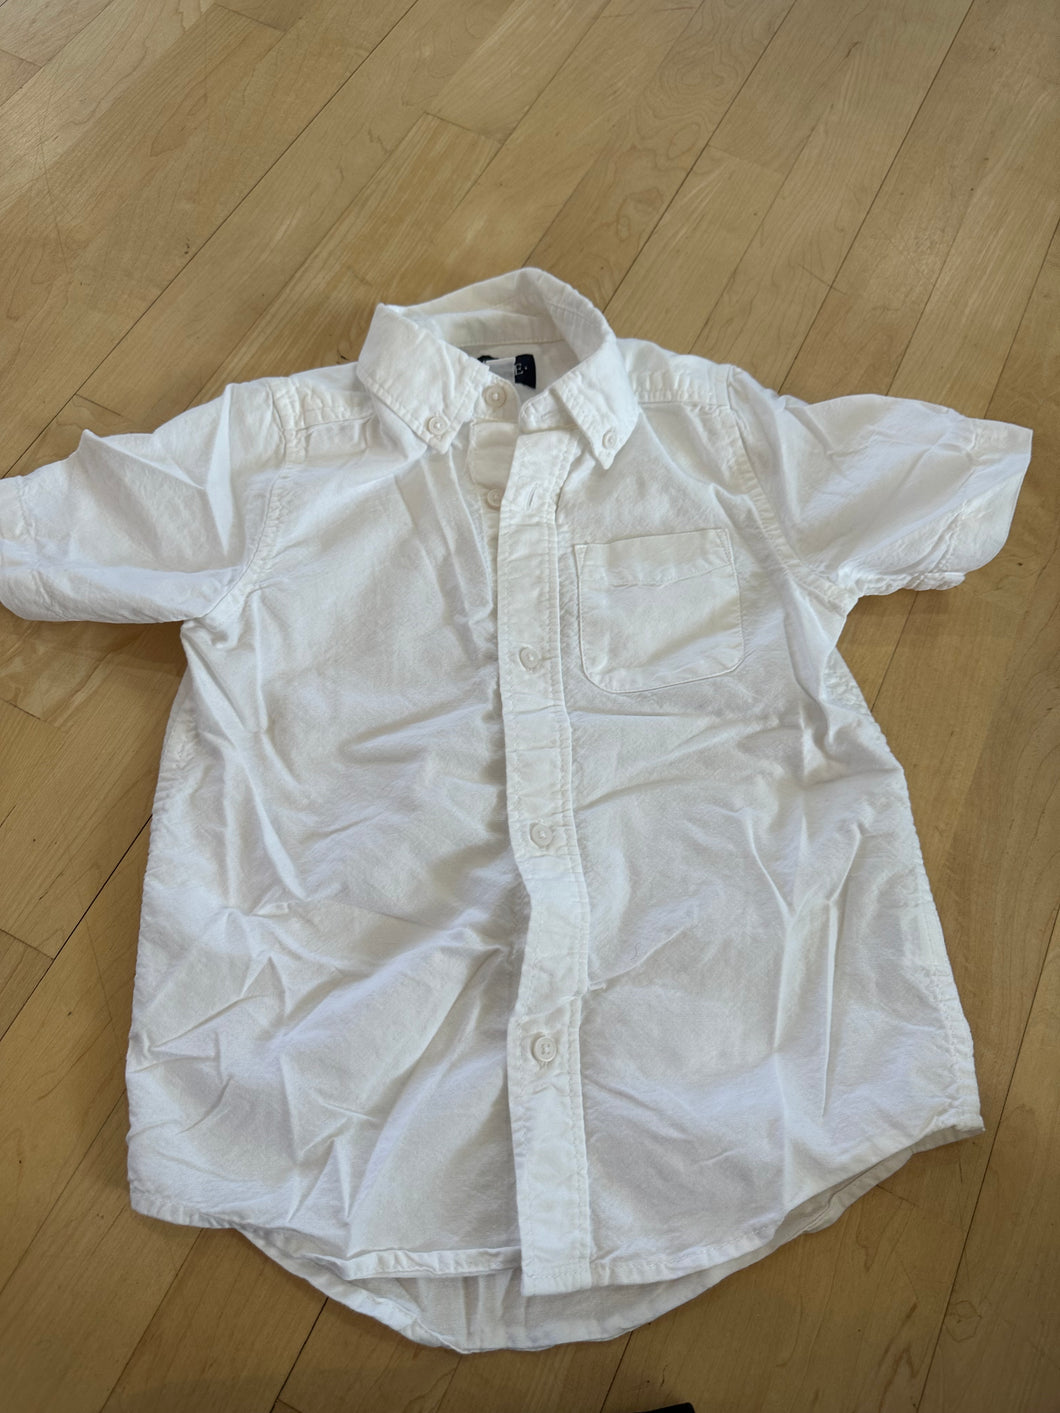 French Toast white uniform dress shirt 4T